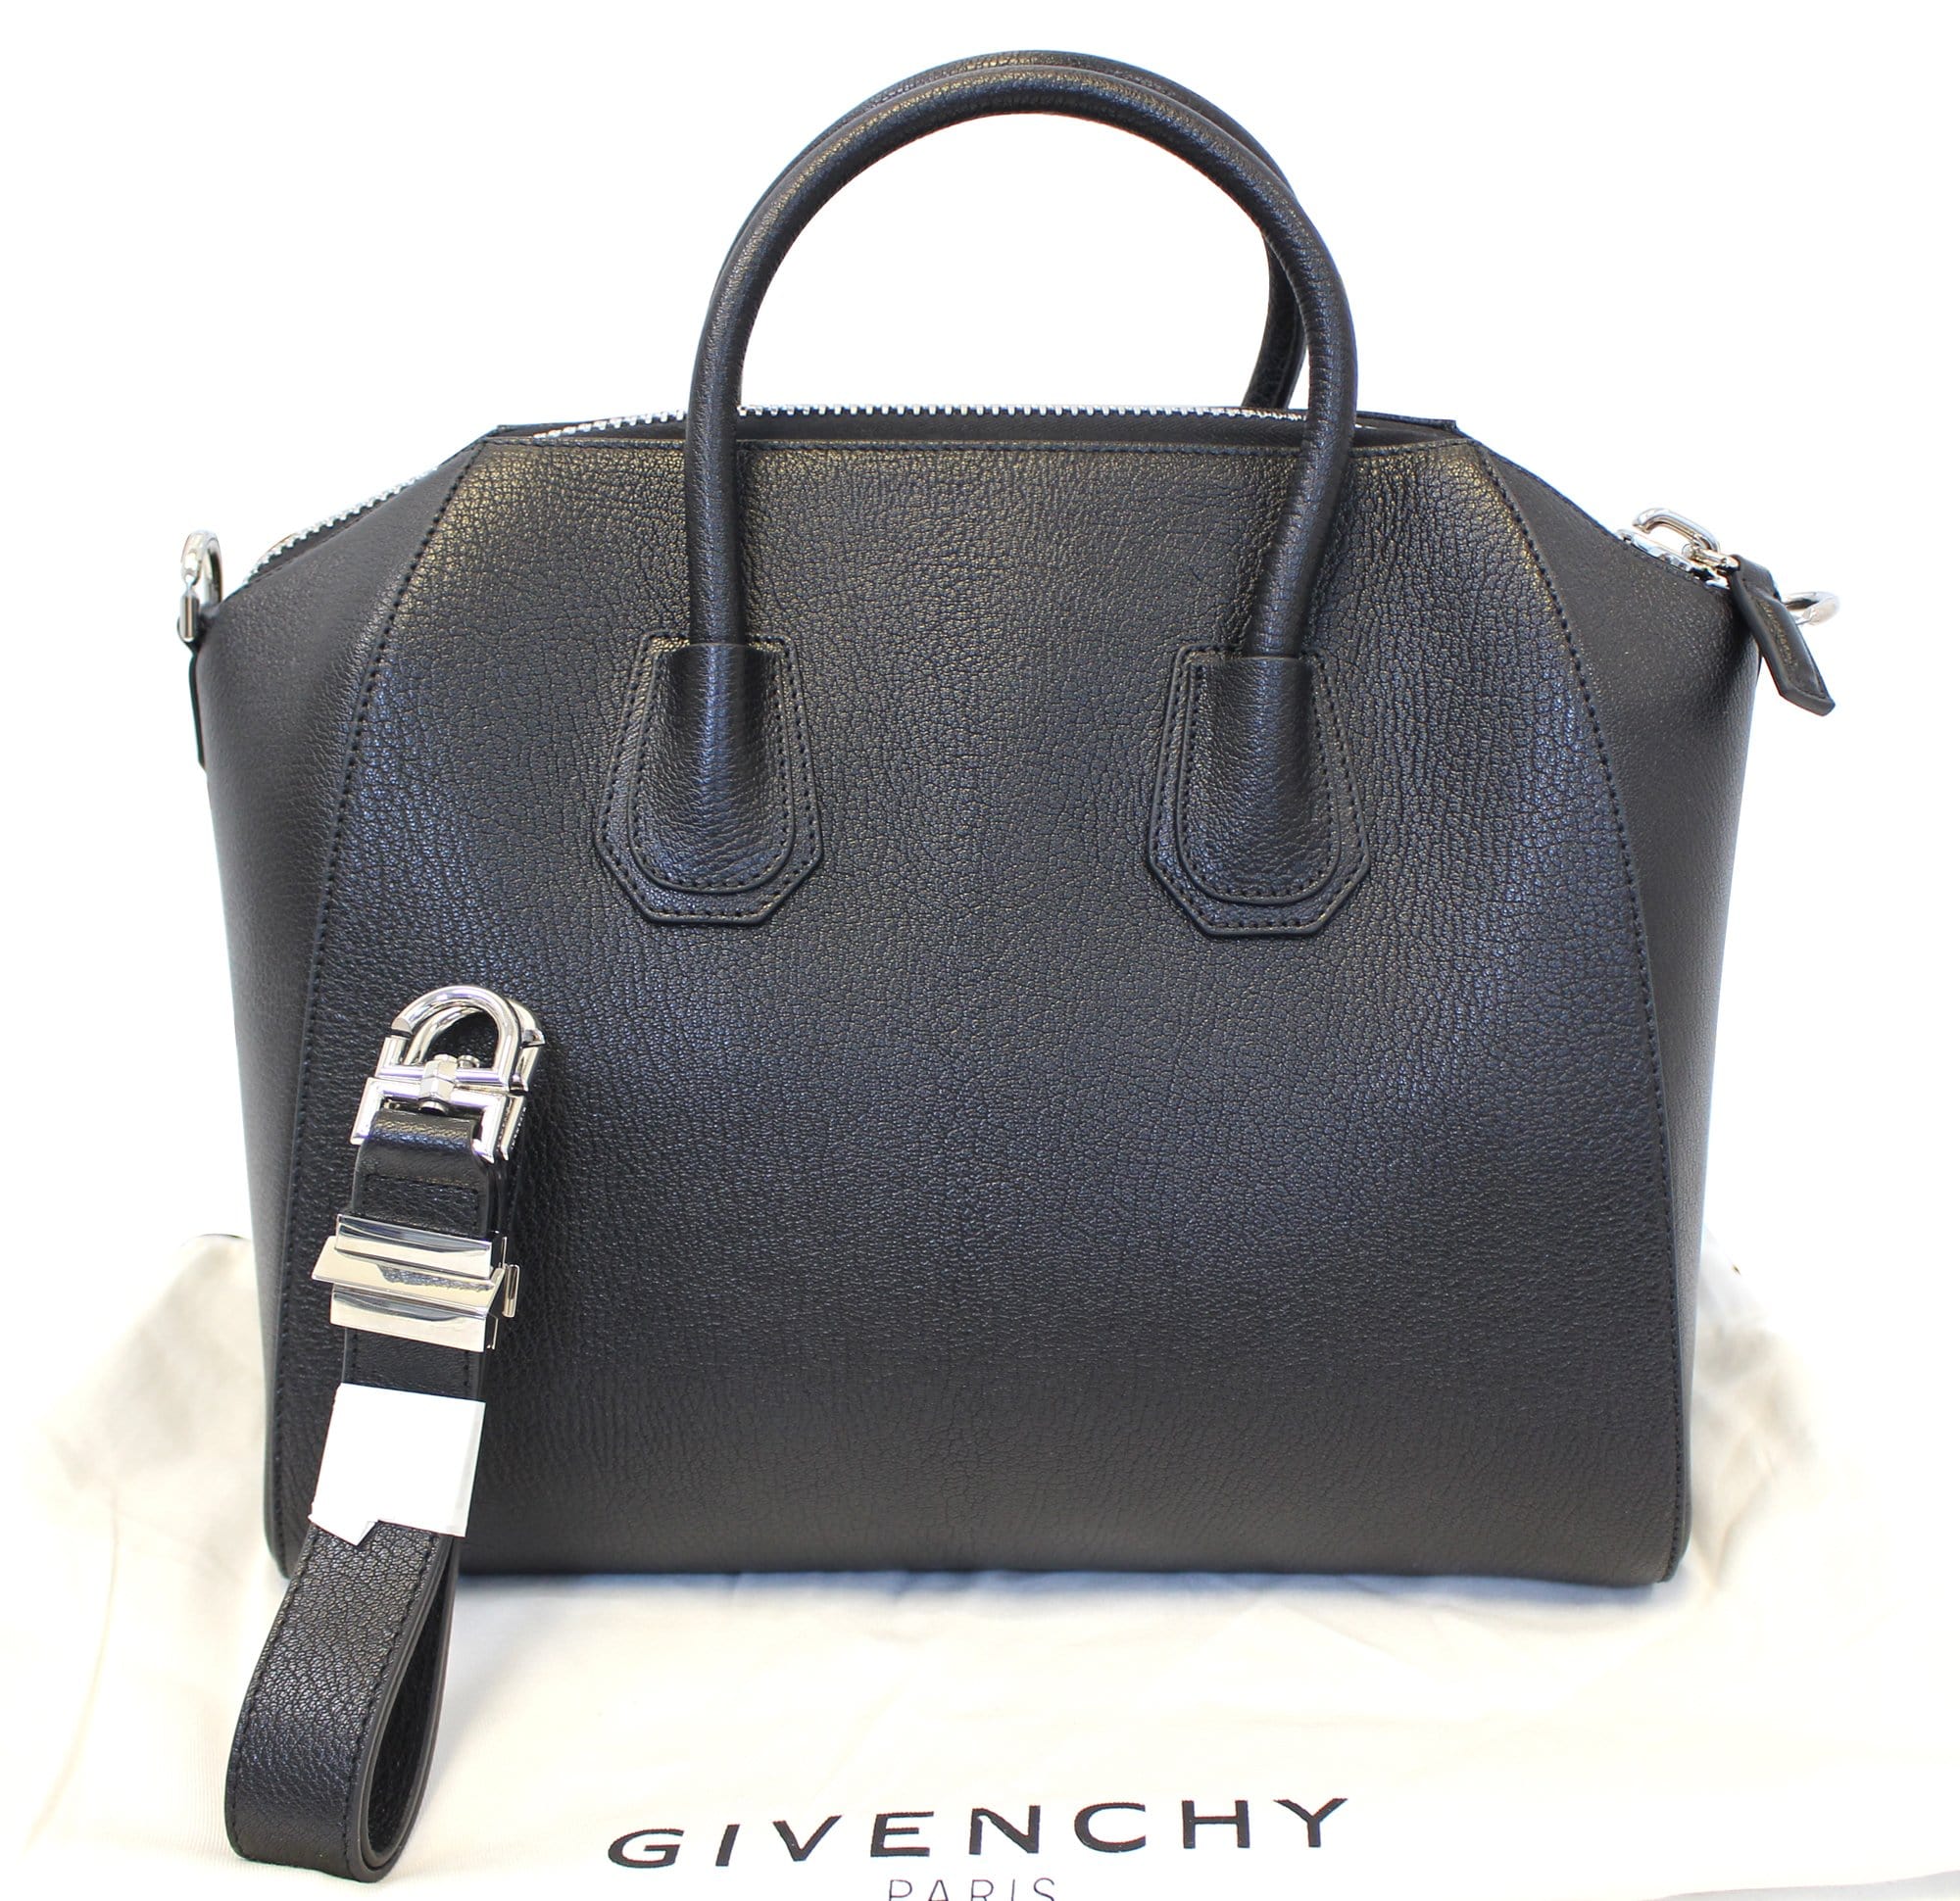 Givenchy Large Antigona Clutch in Black